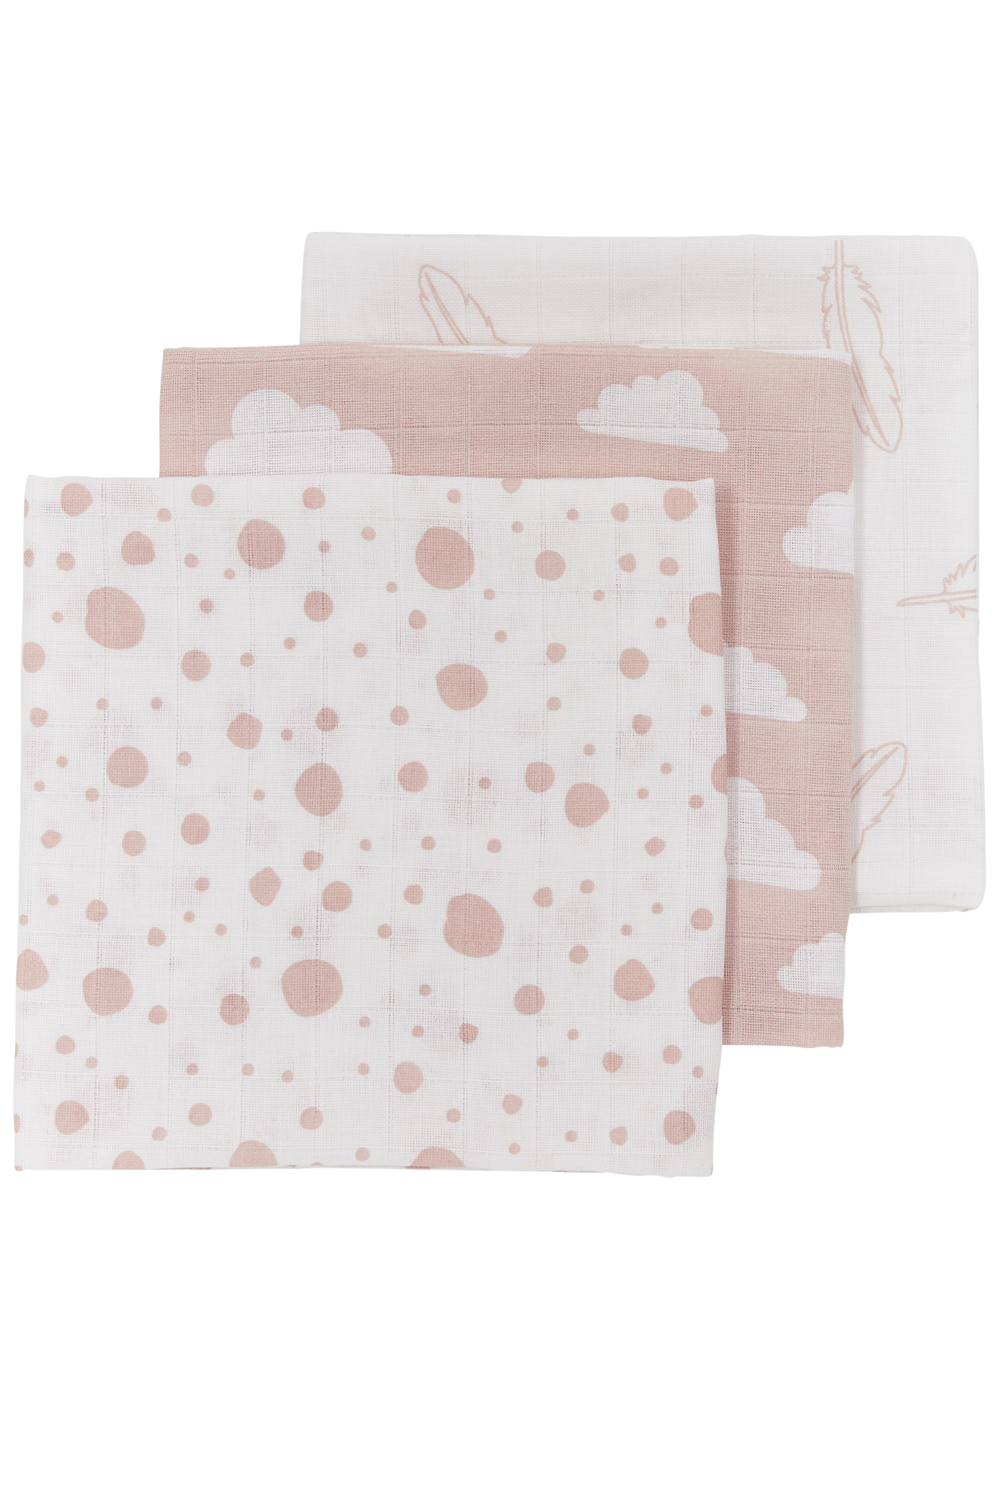 Hydrofiele doeken 3-pack Clouds/Dots/Feathers - pink - 70x70cm